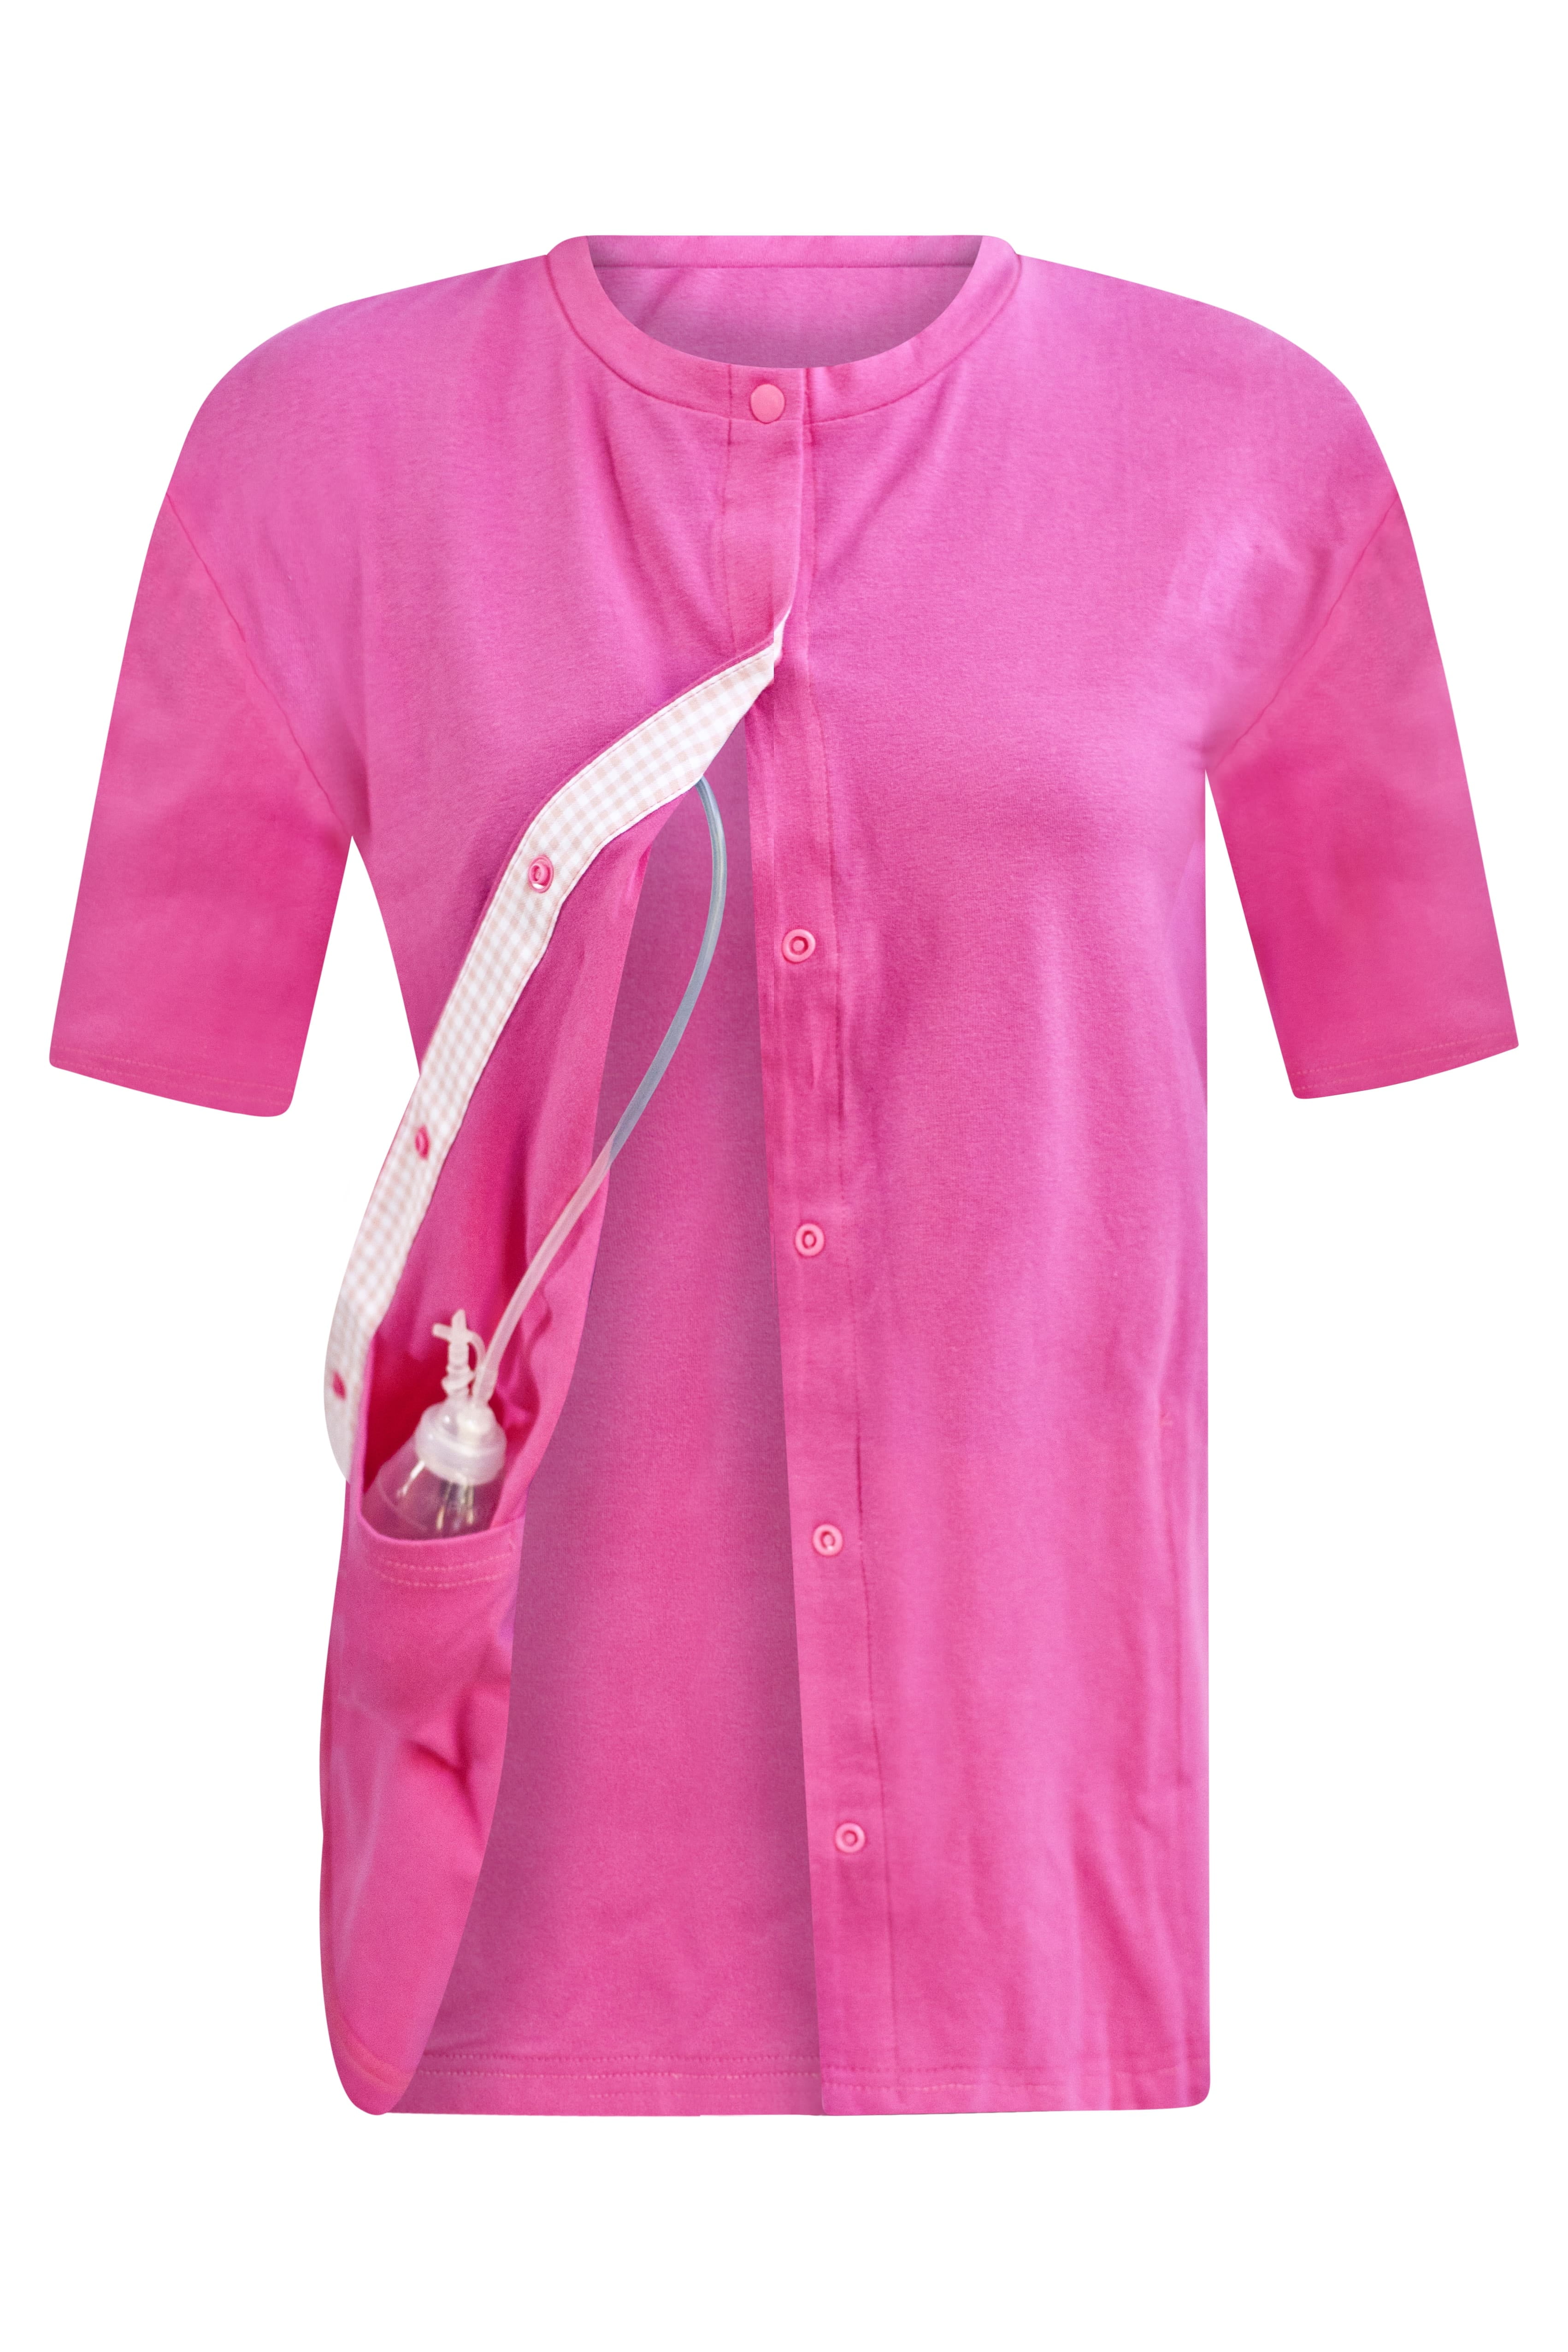 Post Surgery Mastectomy Shirt With Drain Management Pockets -Fuchsia Tee- Mastectomy  Shirts With Drain Pockets -Breast Cancer Post Surgery Clothing for Women - Shirts With Drain Pockets Post Mastectomy 